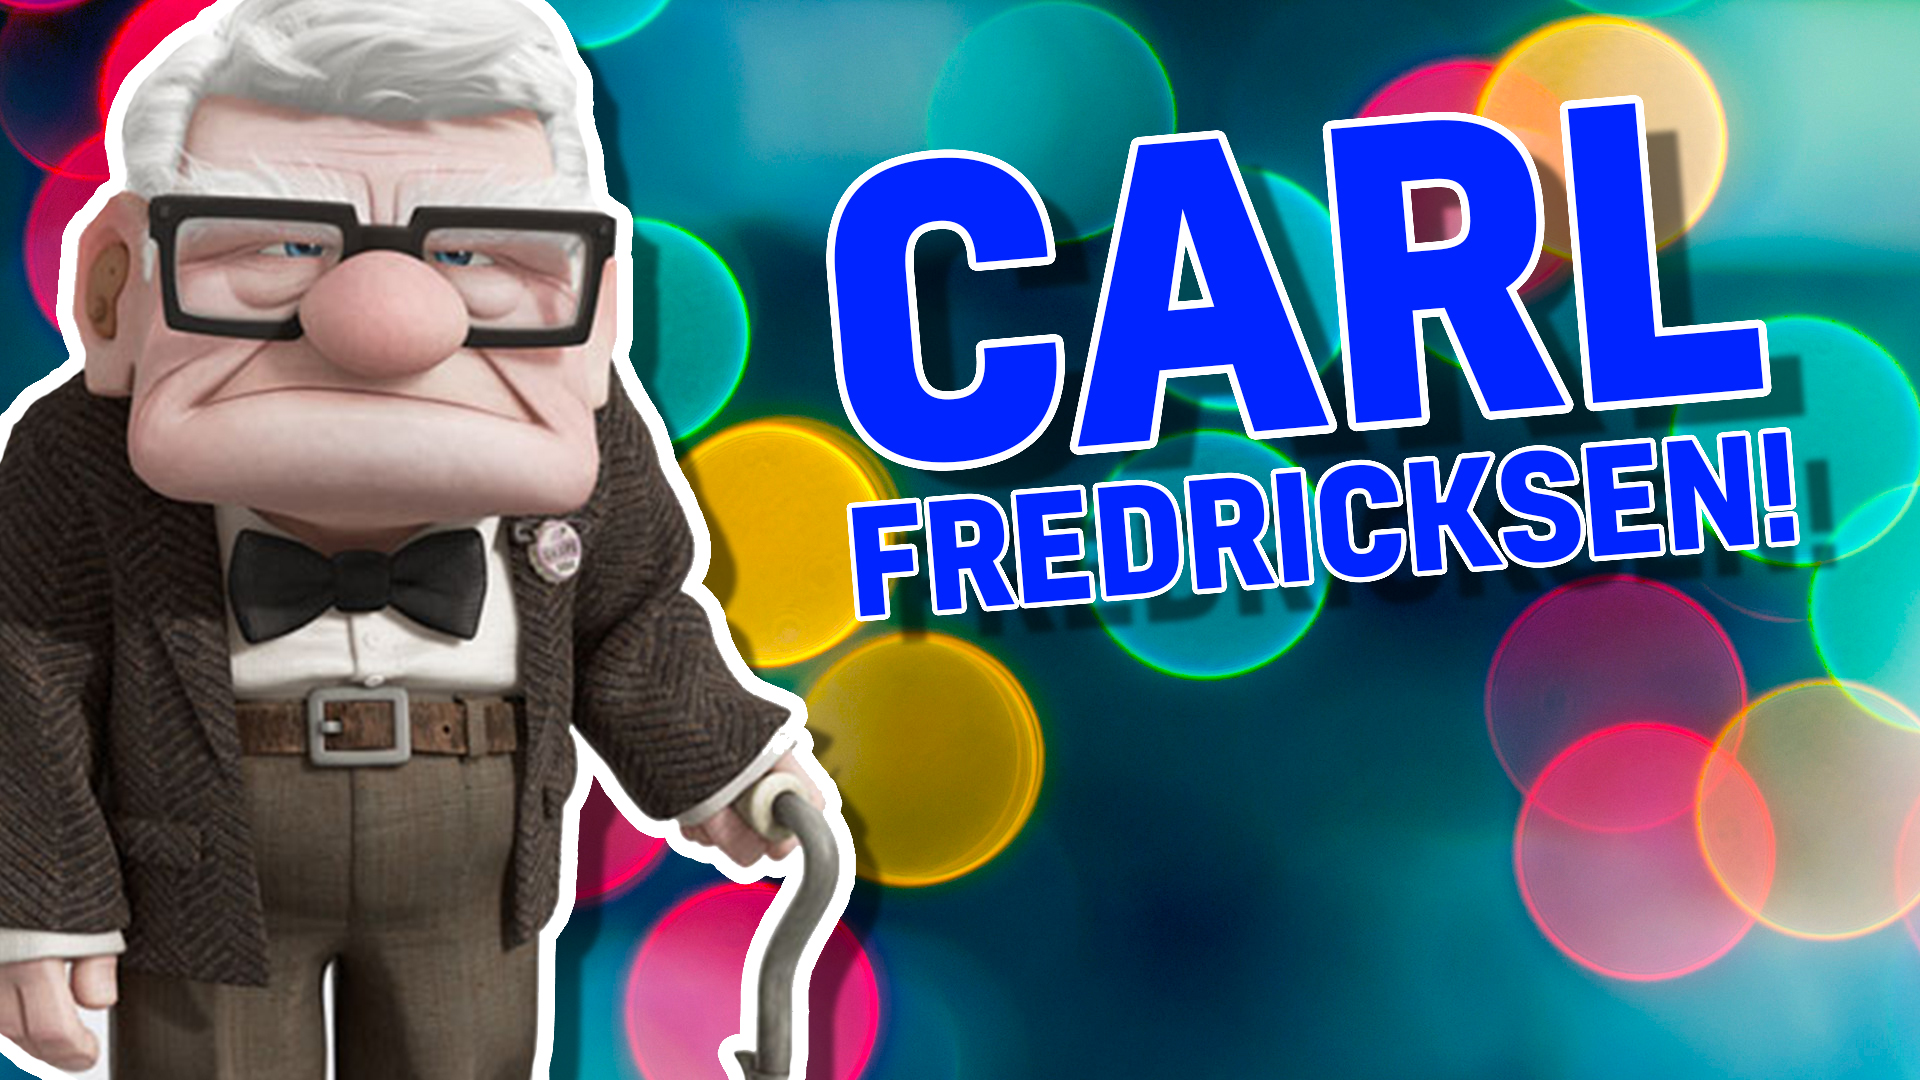 Carl Fredricksen from Up